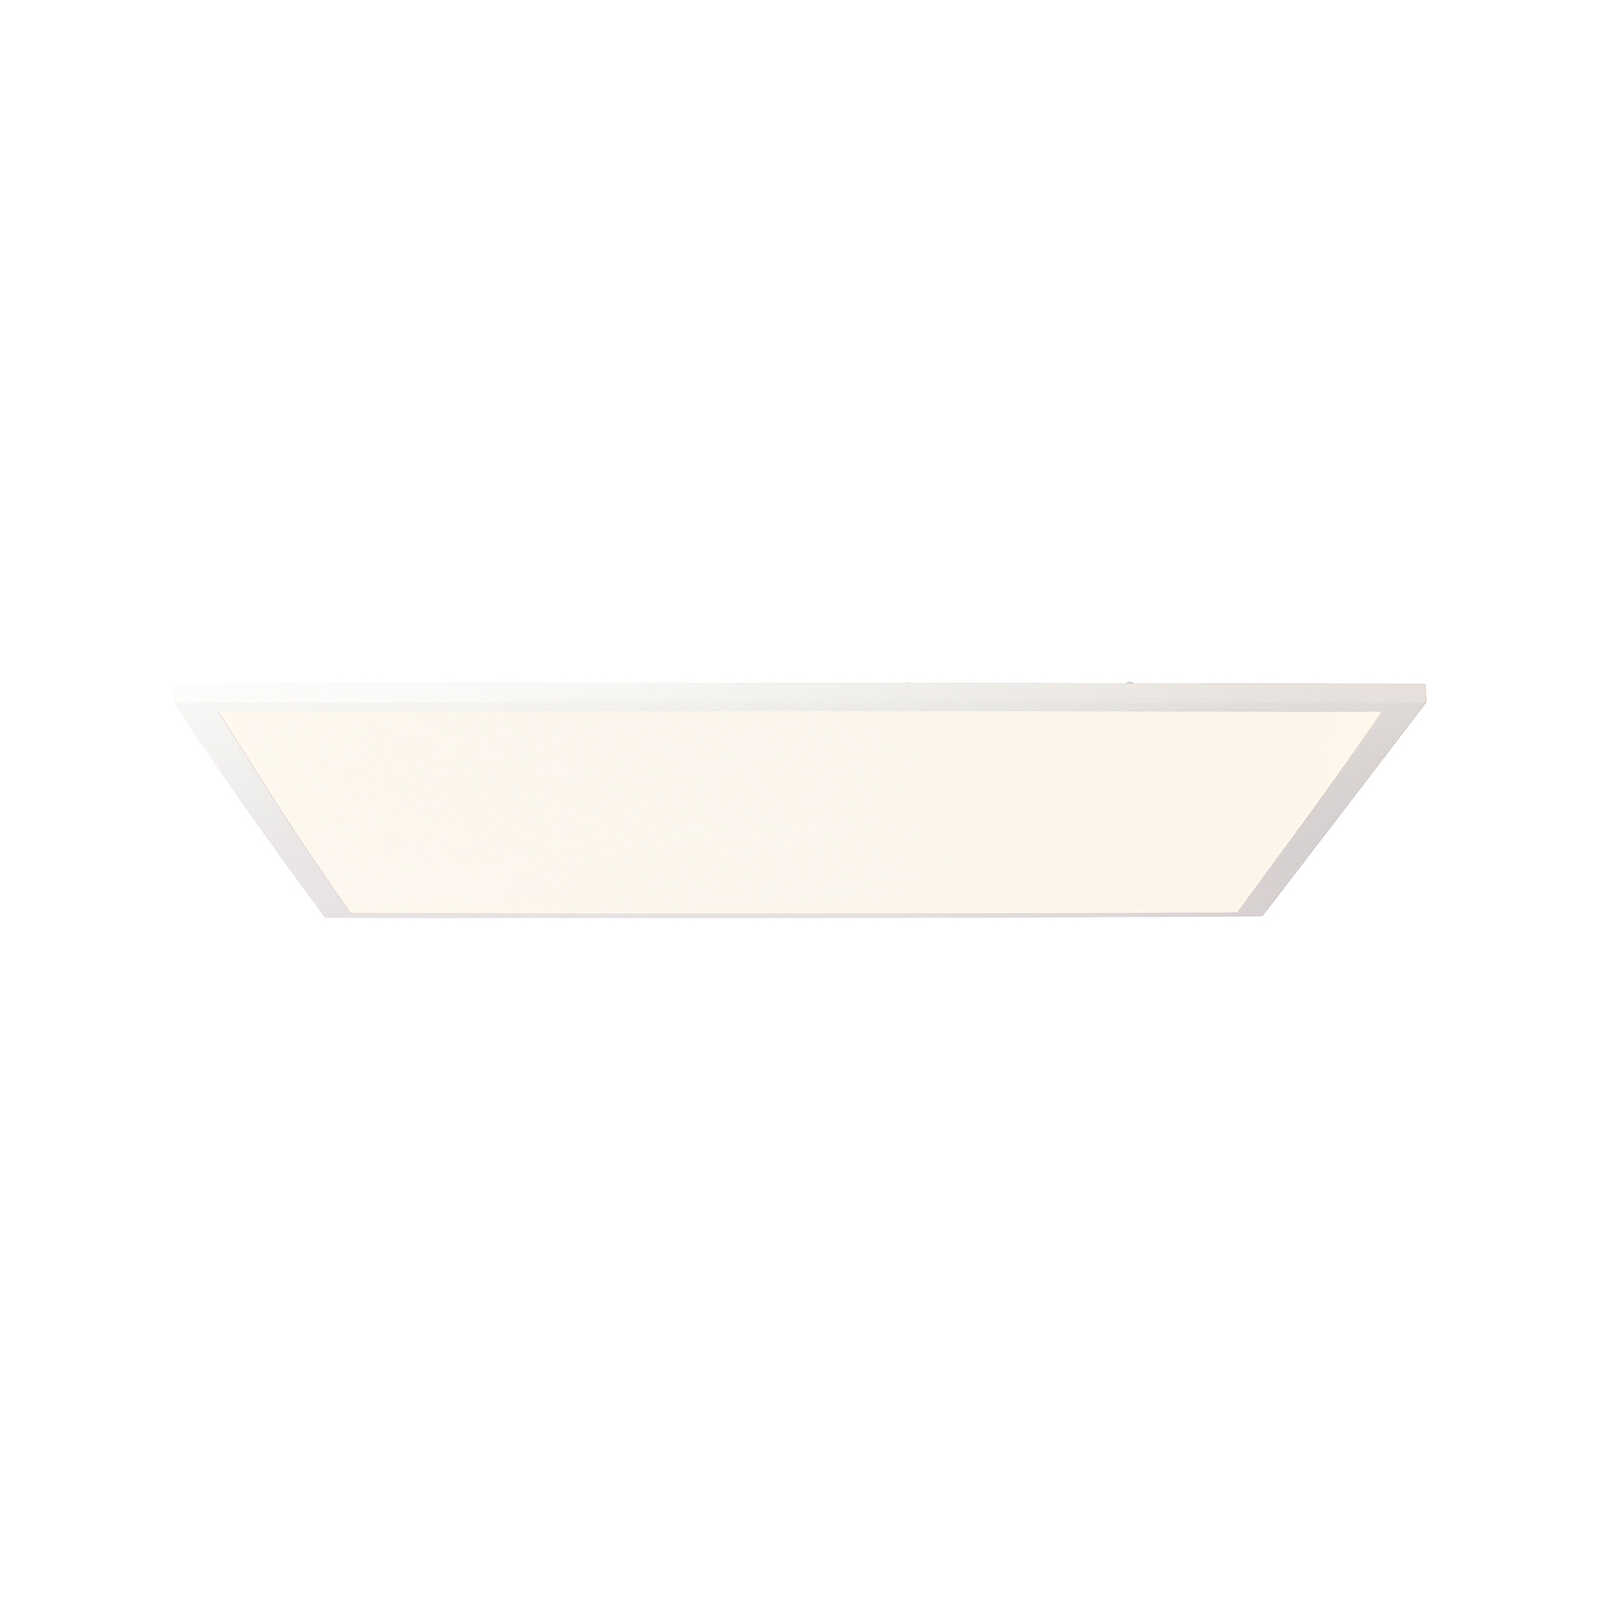 Plastic ceiling light - Constantin 8 - White
